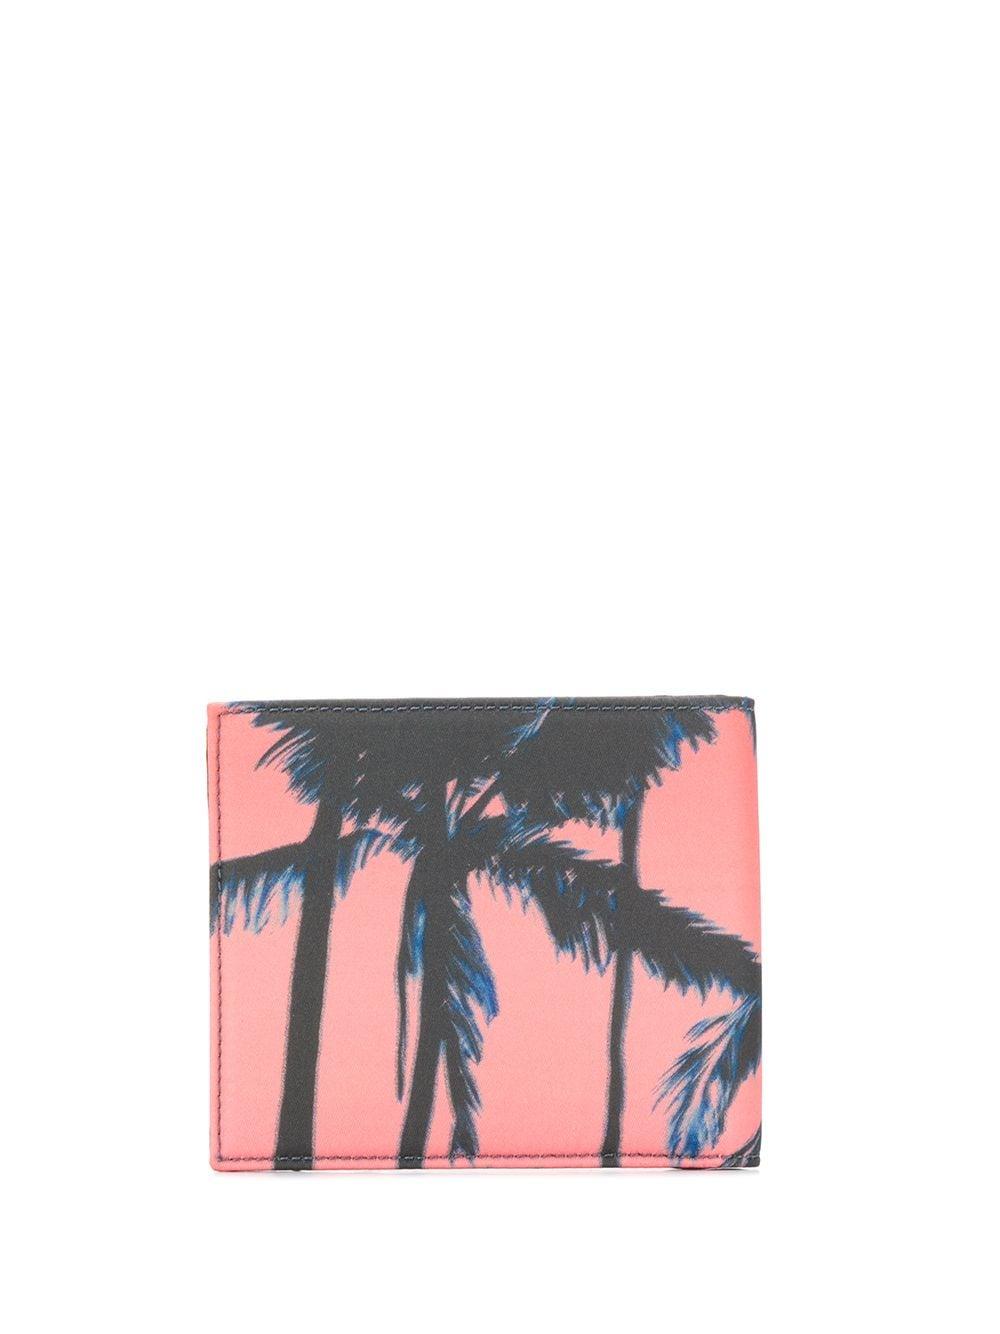 Saint Laurent Leather Palm-tree Bi-fold Wallet in Black for Men - Lyst